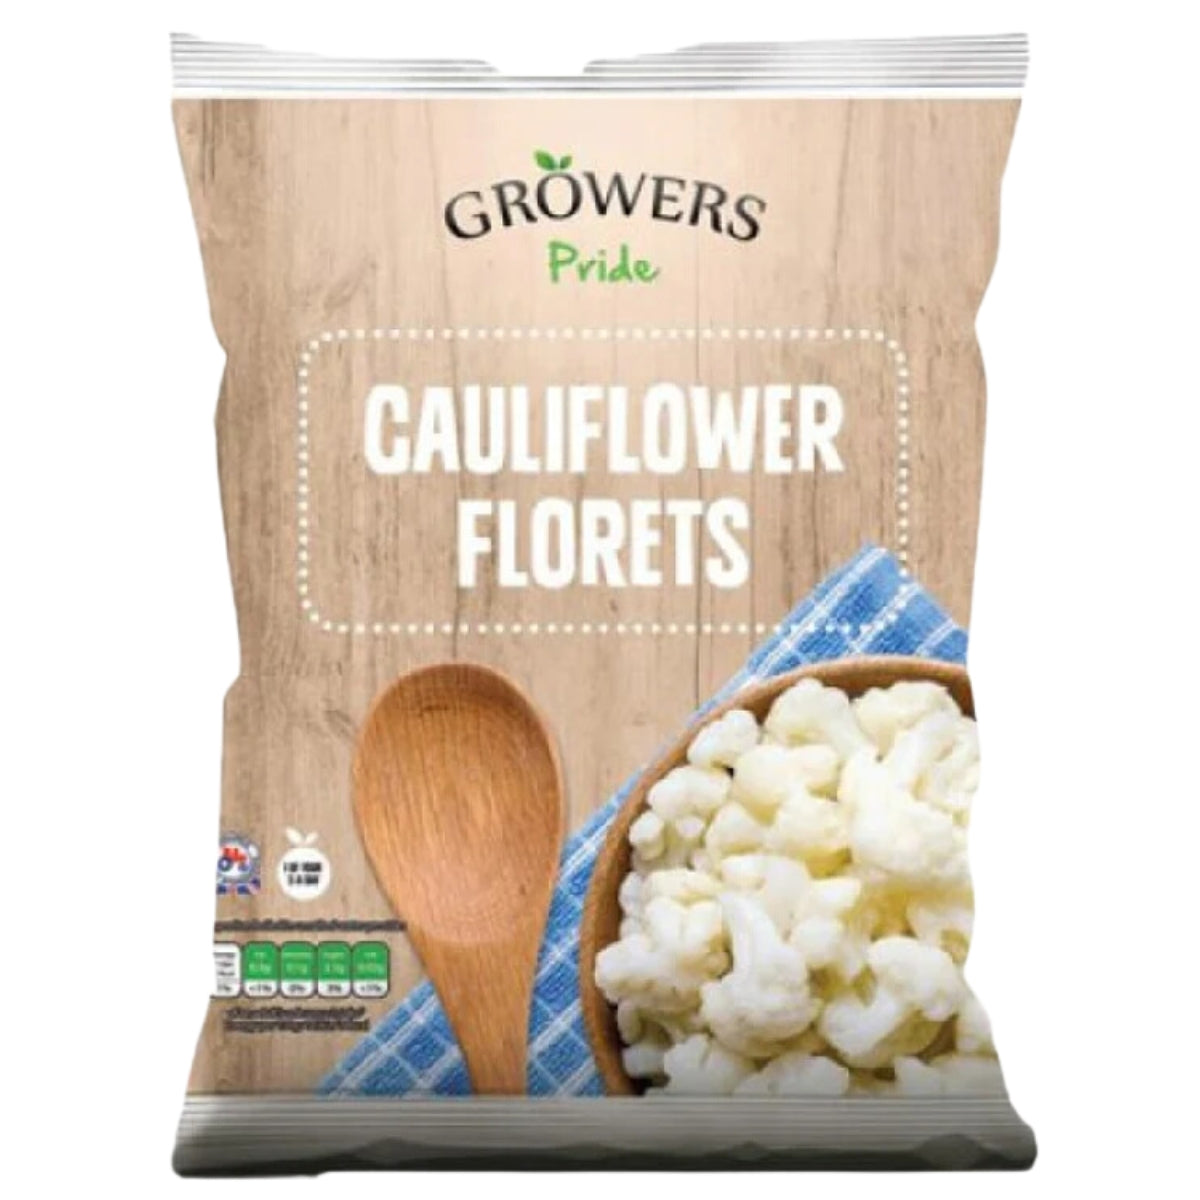 Growers Pride - Cauliflower Florets - 450g.